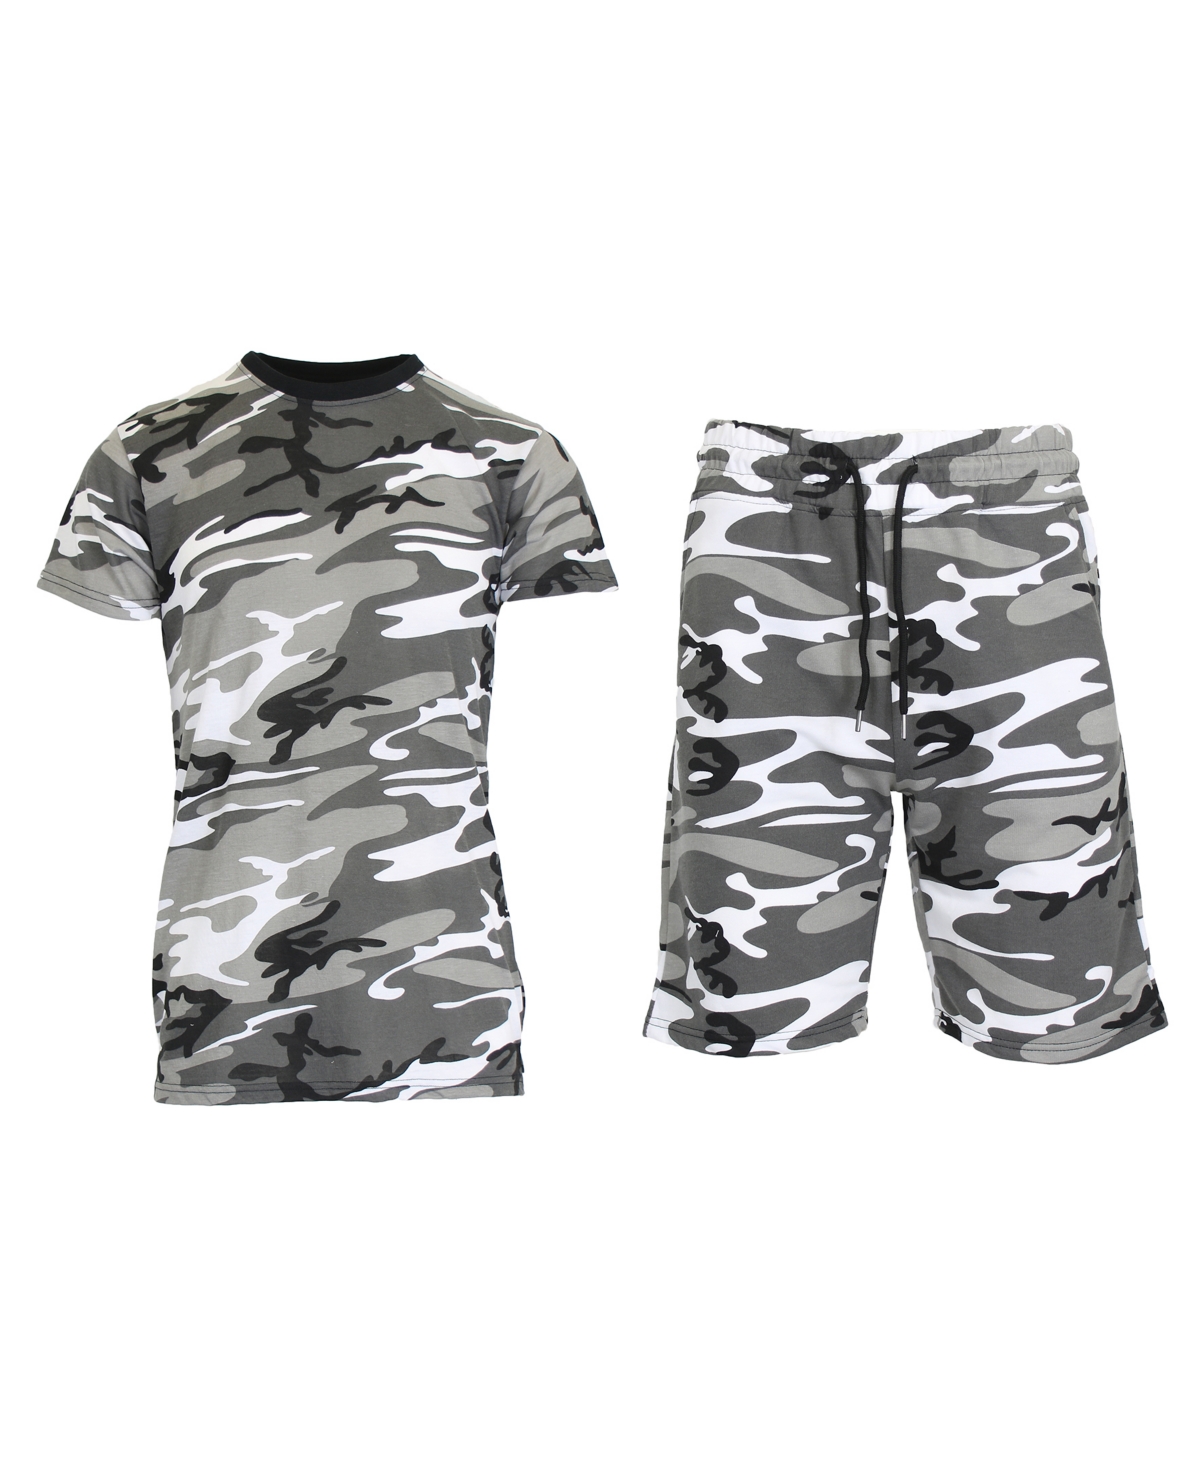 Galaxy By Harvic Men's Camo Short Sleeve T-shirt And Shorts, 2-piece Set In Urban Camo